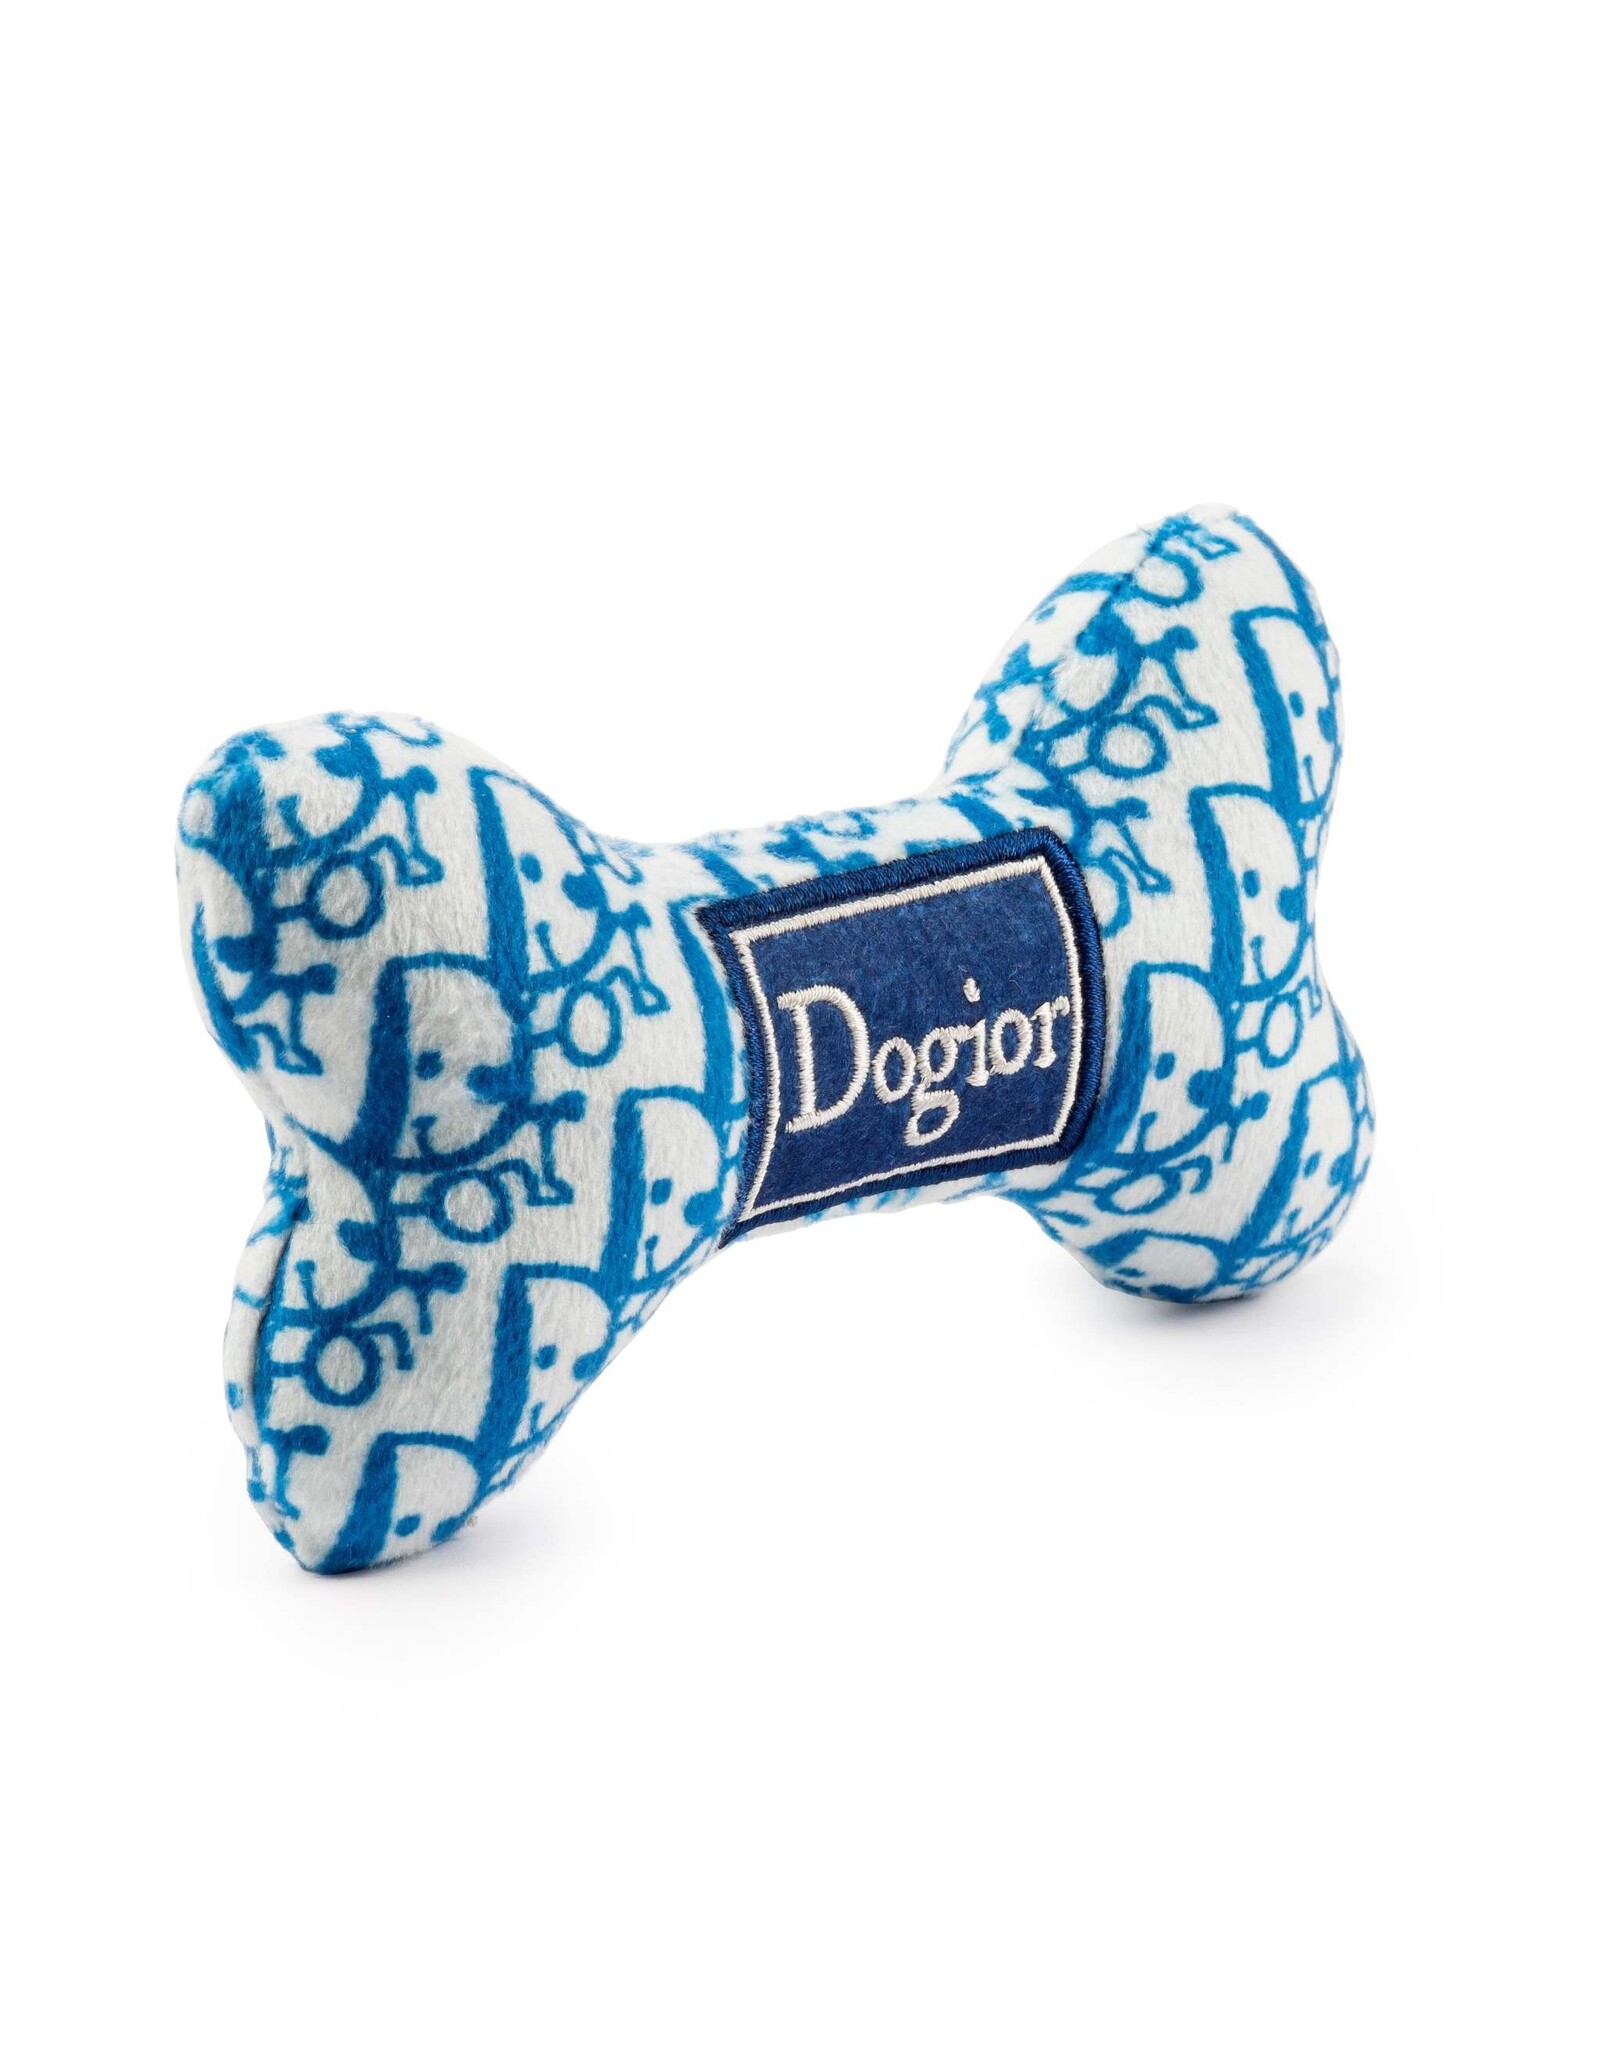 Haute Diggity Dog Dogior Bone Squeaker Dog Toy SM